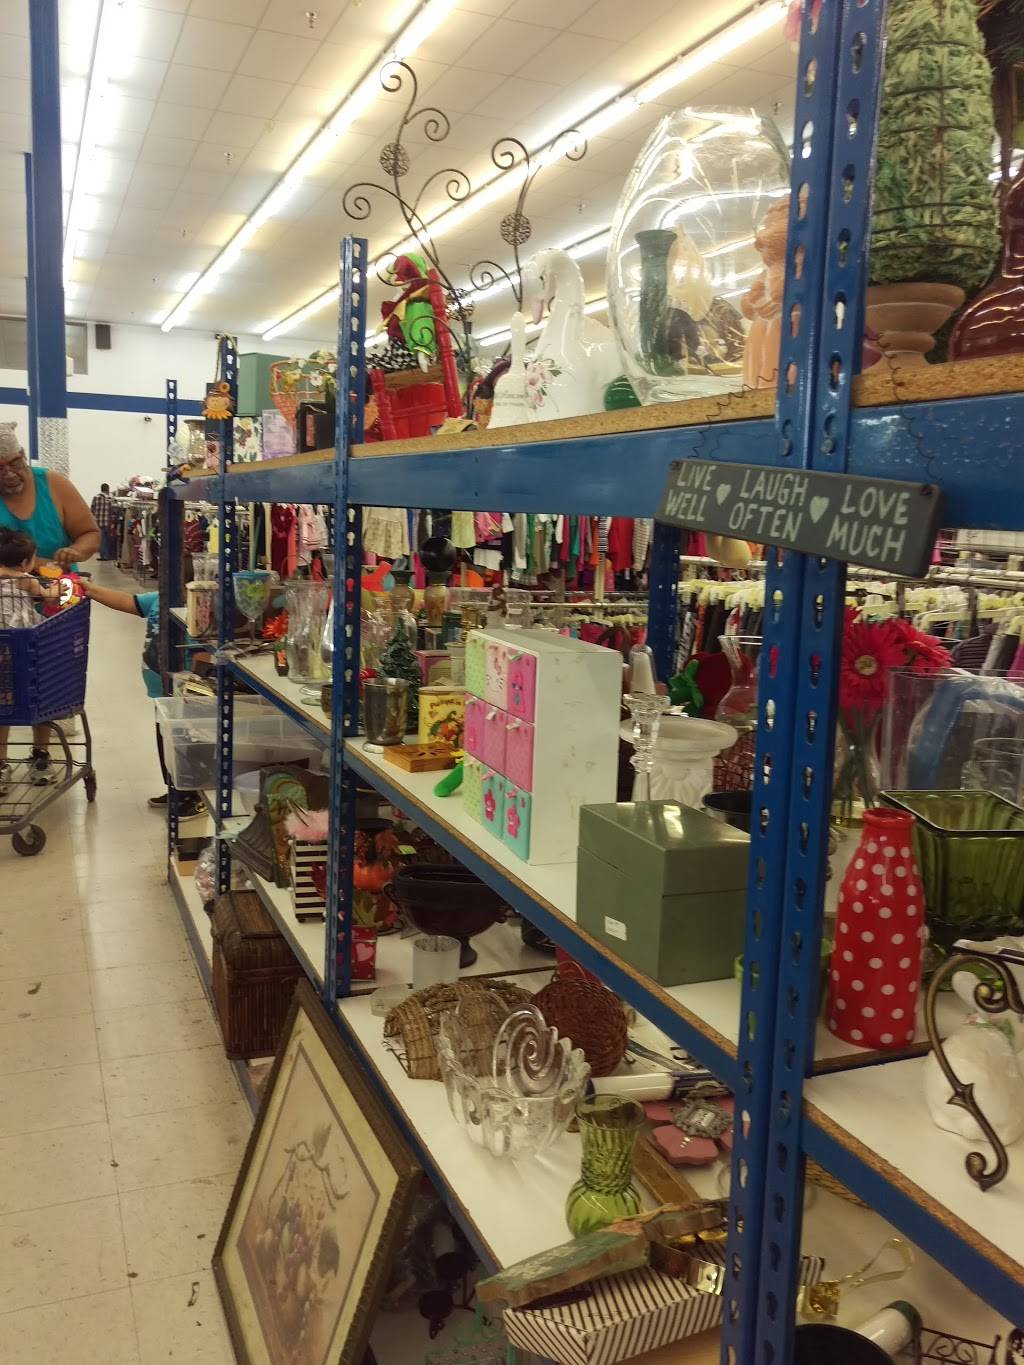 Community Thrift Store | 4525 S Pennsylvania Ave, Oklahoma City, OK 73119, USA | Phone: (405) 681-9922